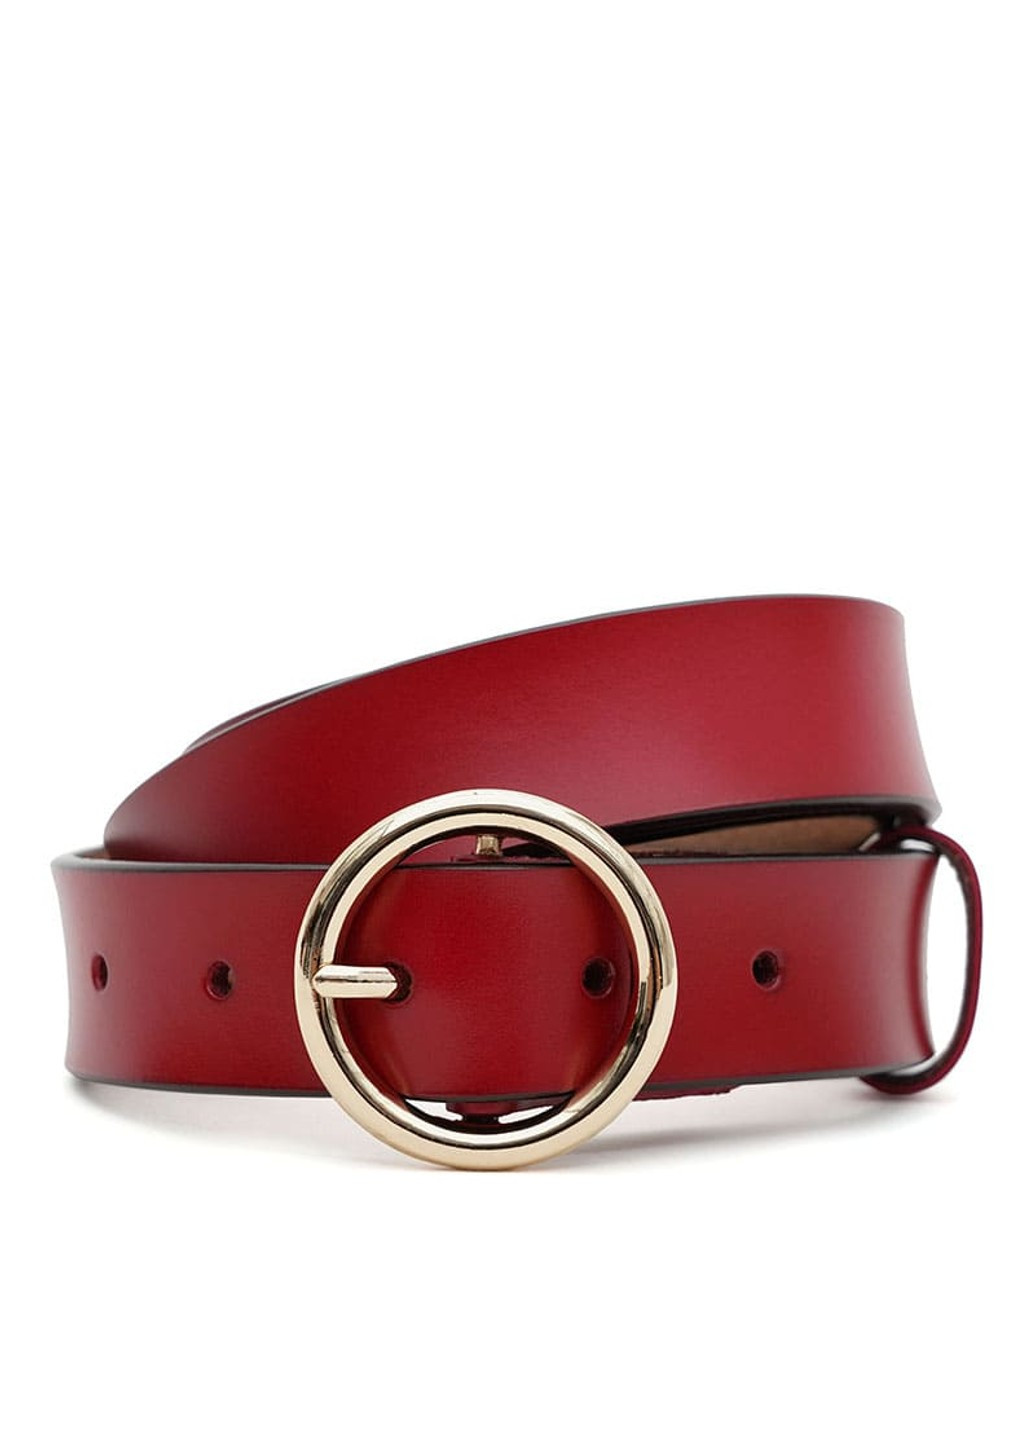 Женский кожаный ремень CV1ZK-037r-red Borsa Leather (266144026)